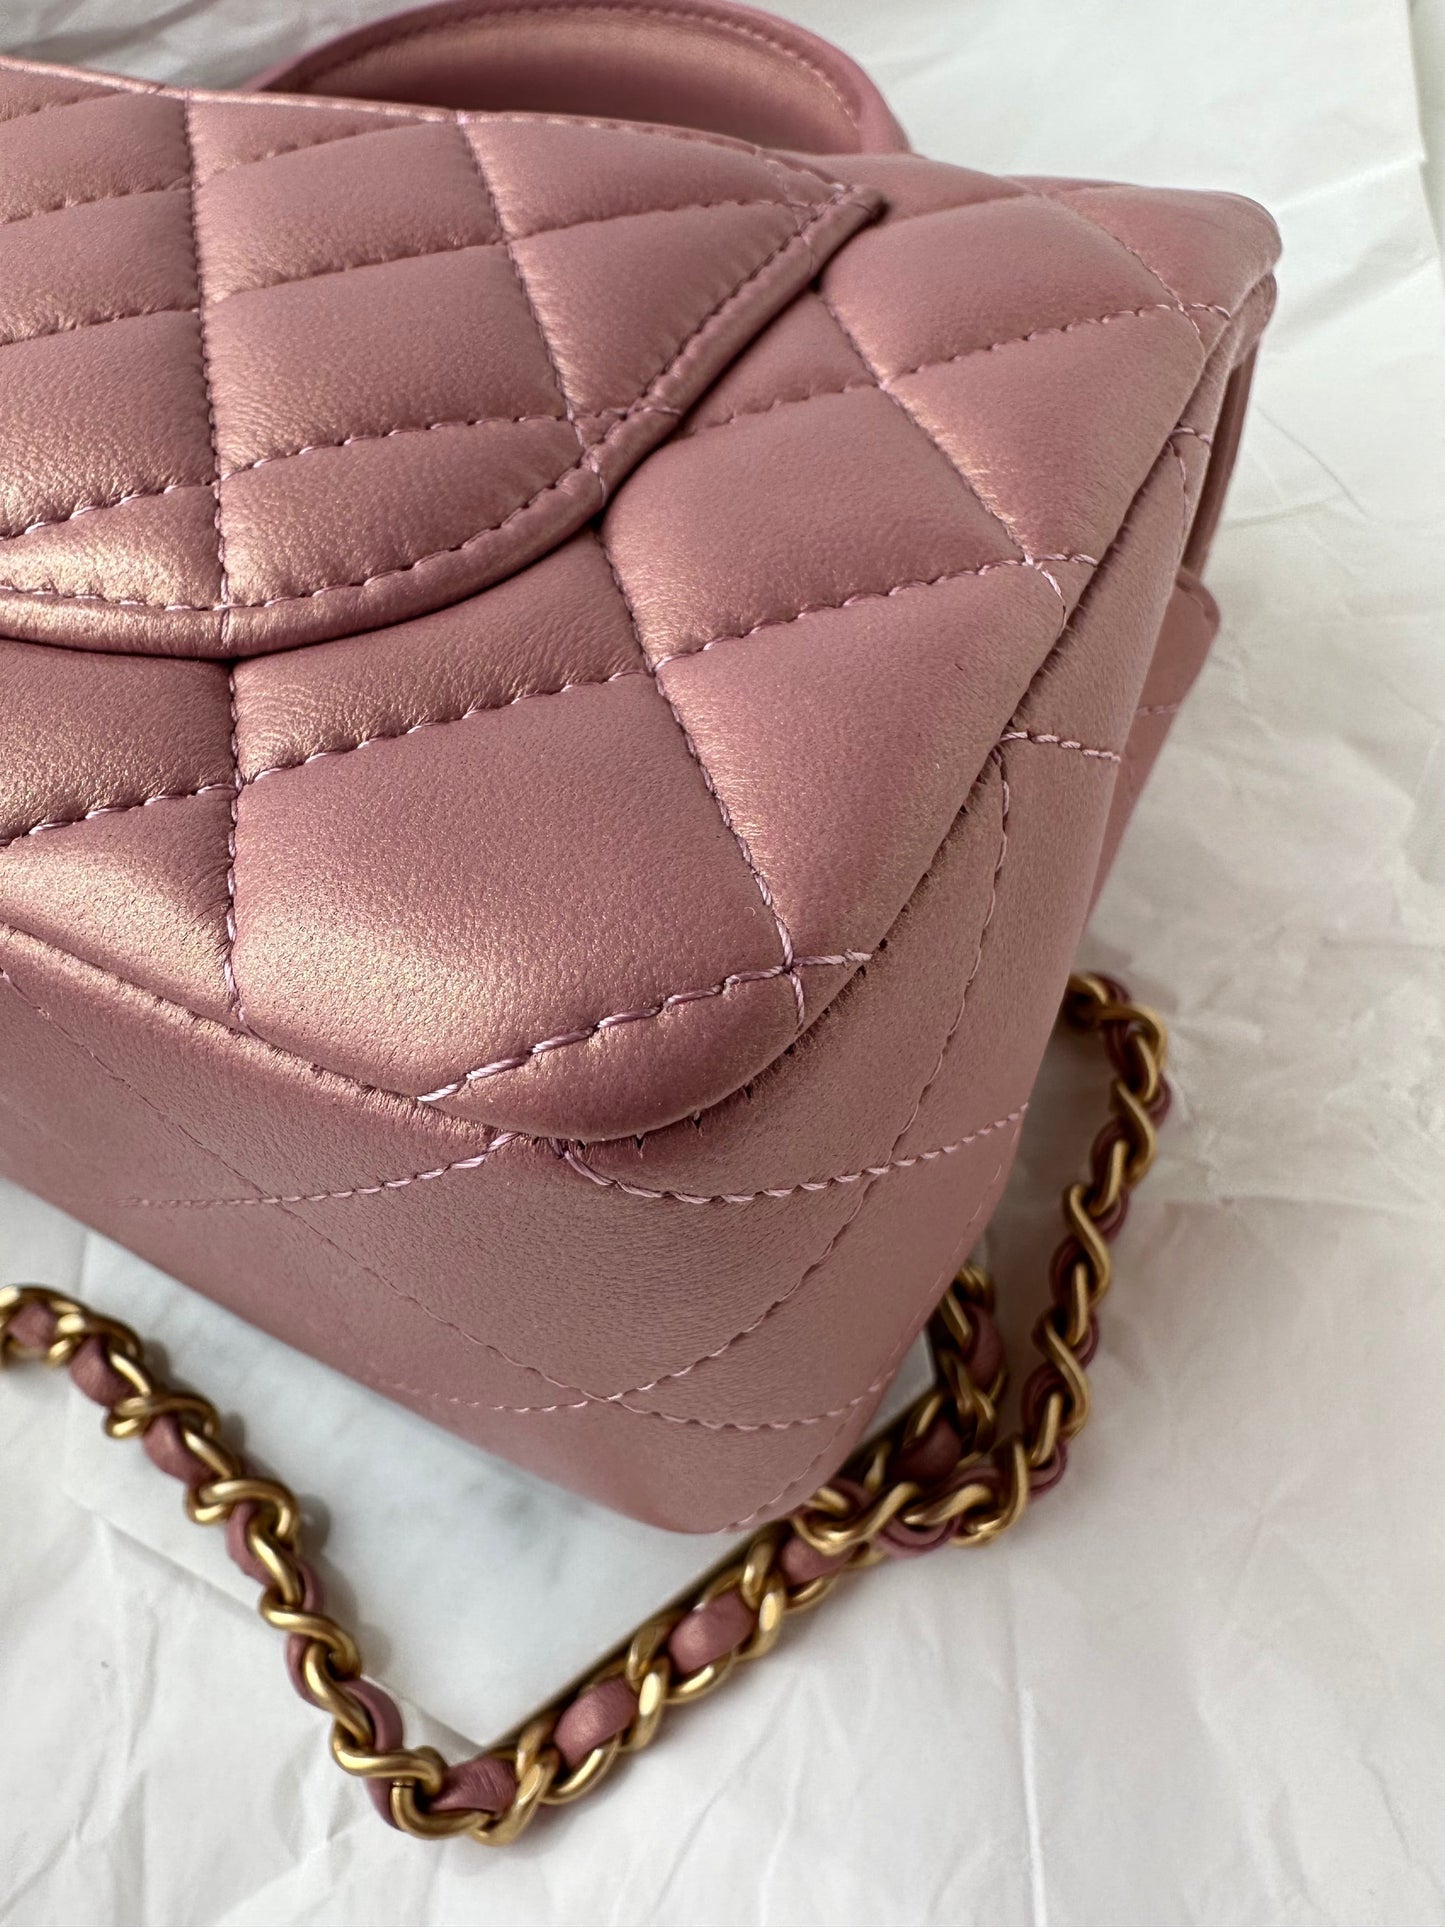 CHANEL 21S Iridescent Mauve Pink Mini Top Handle - Carly Julia Sells Stuff, LLC